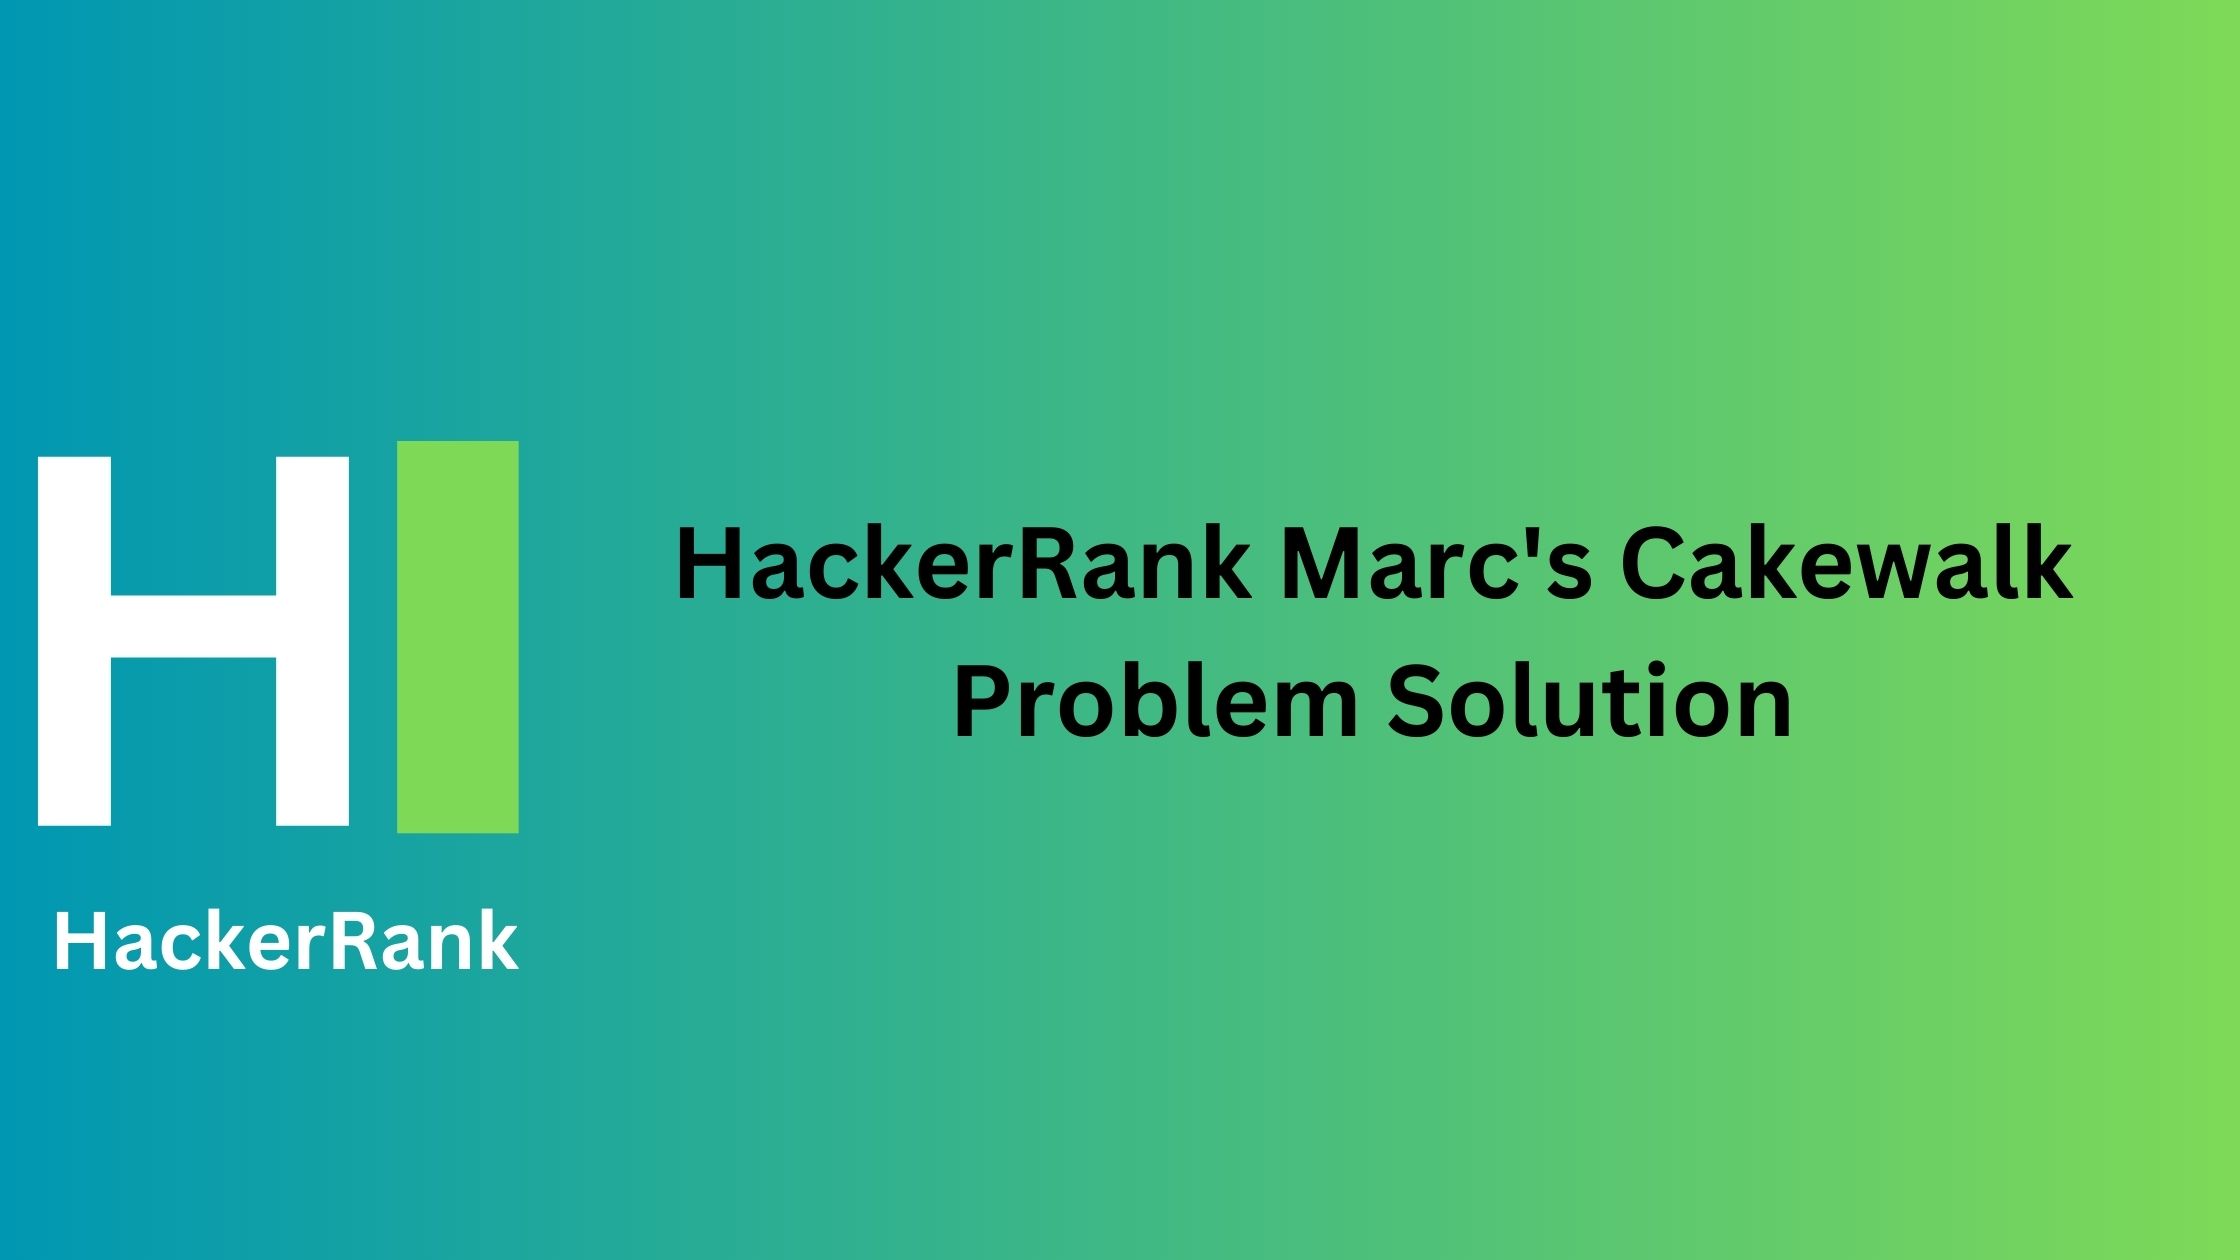 HackerRank Marc's Cakewalk Problem Solution